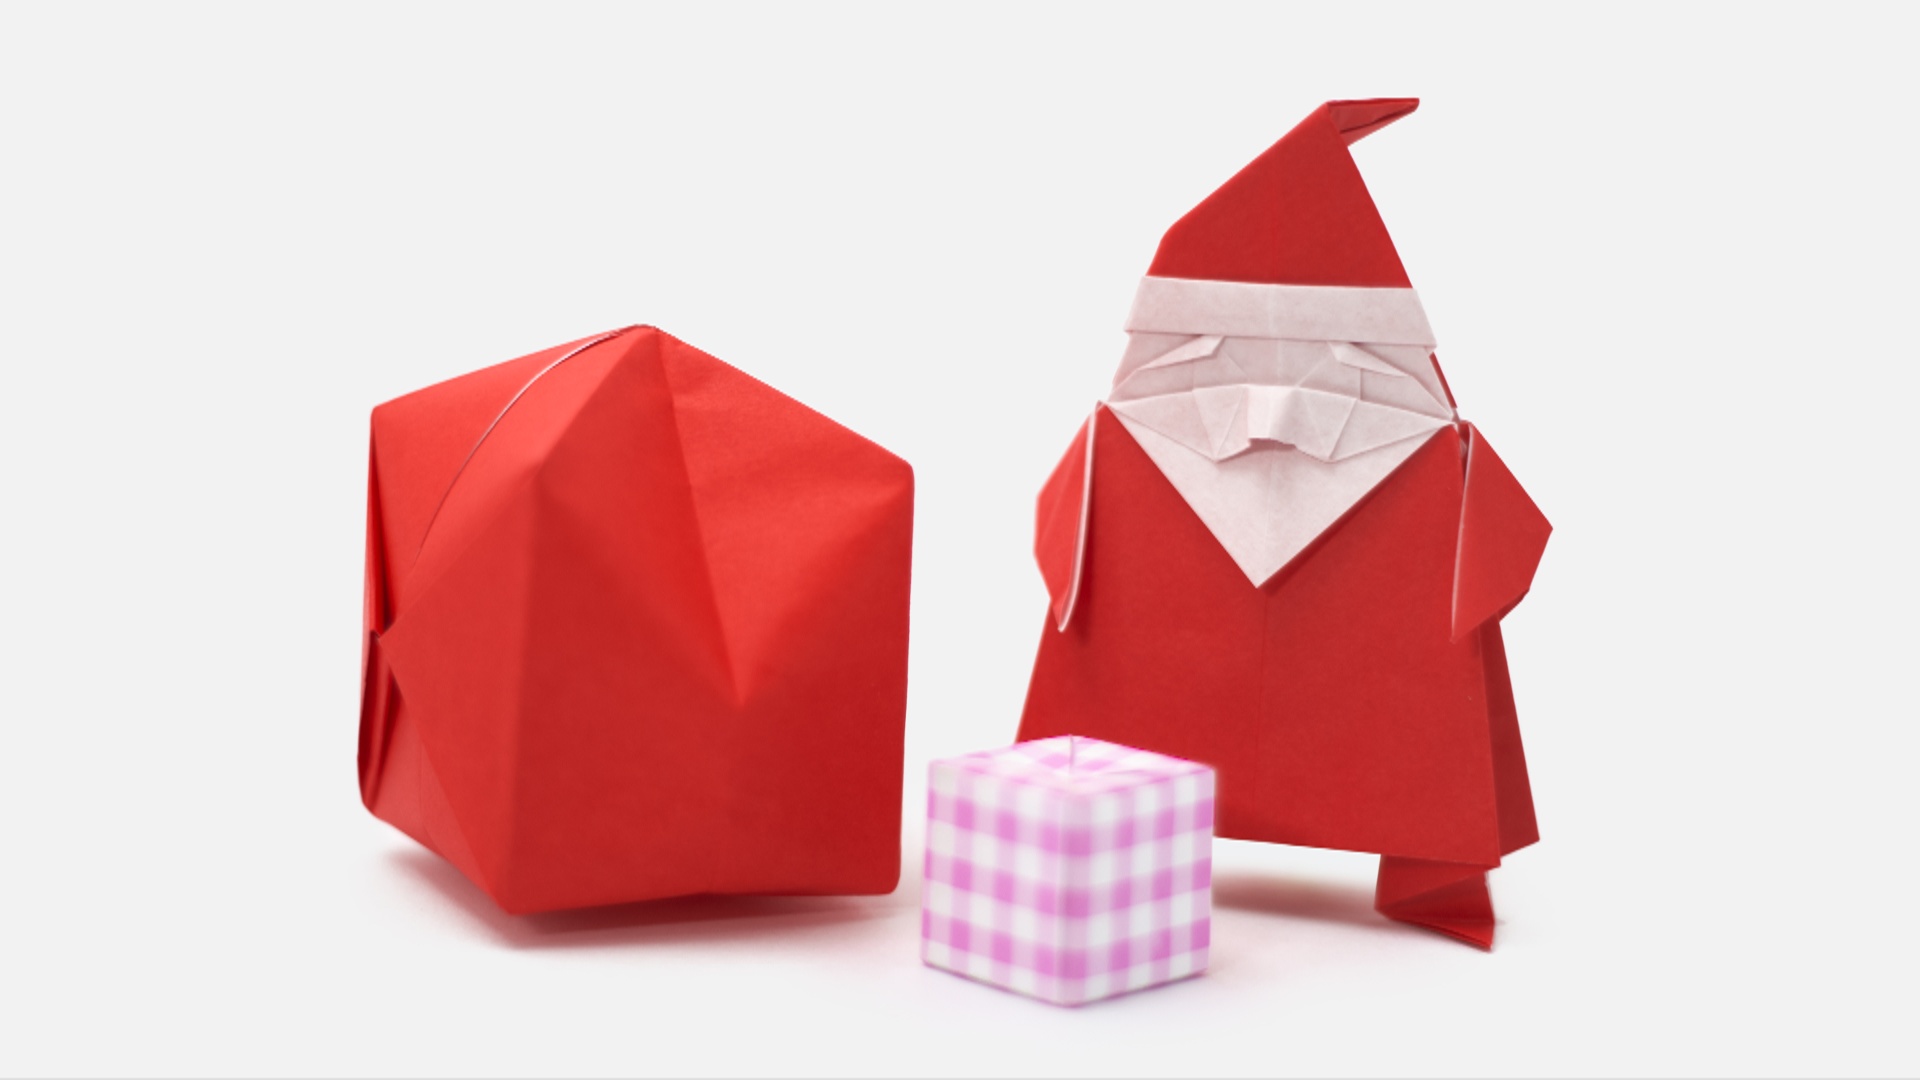 Origami Santa Claus – Diagrams and Video